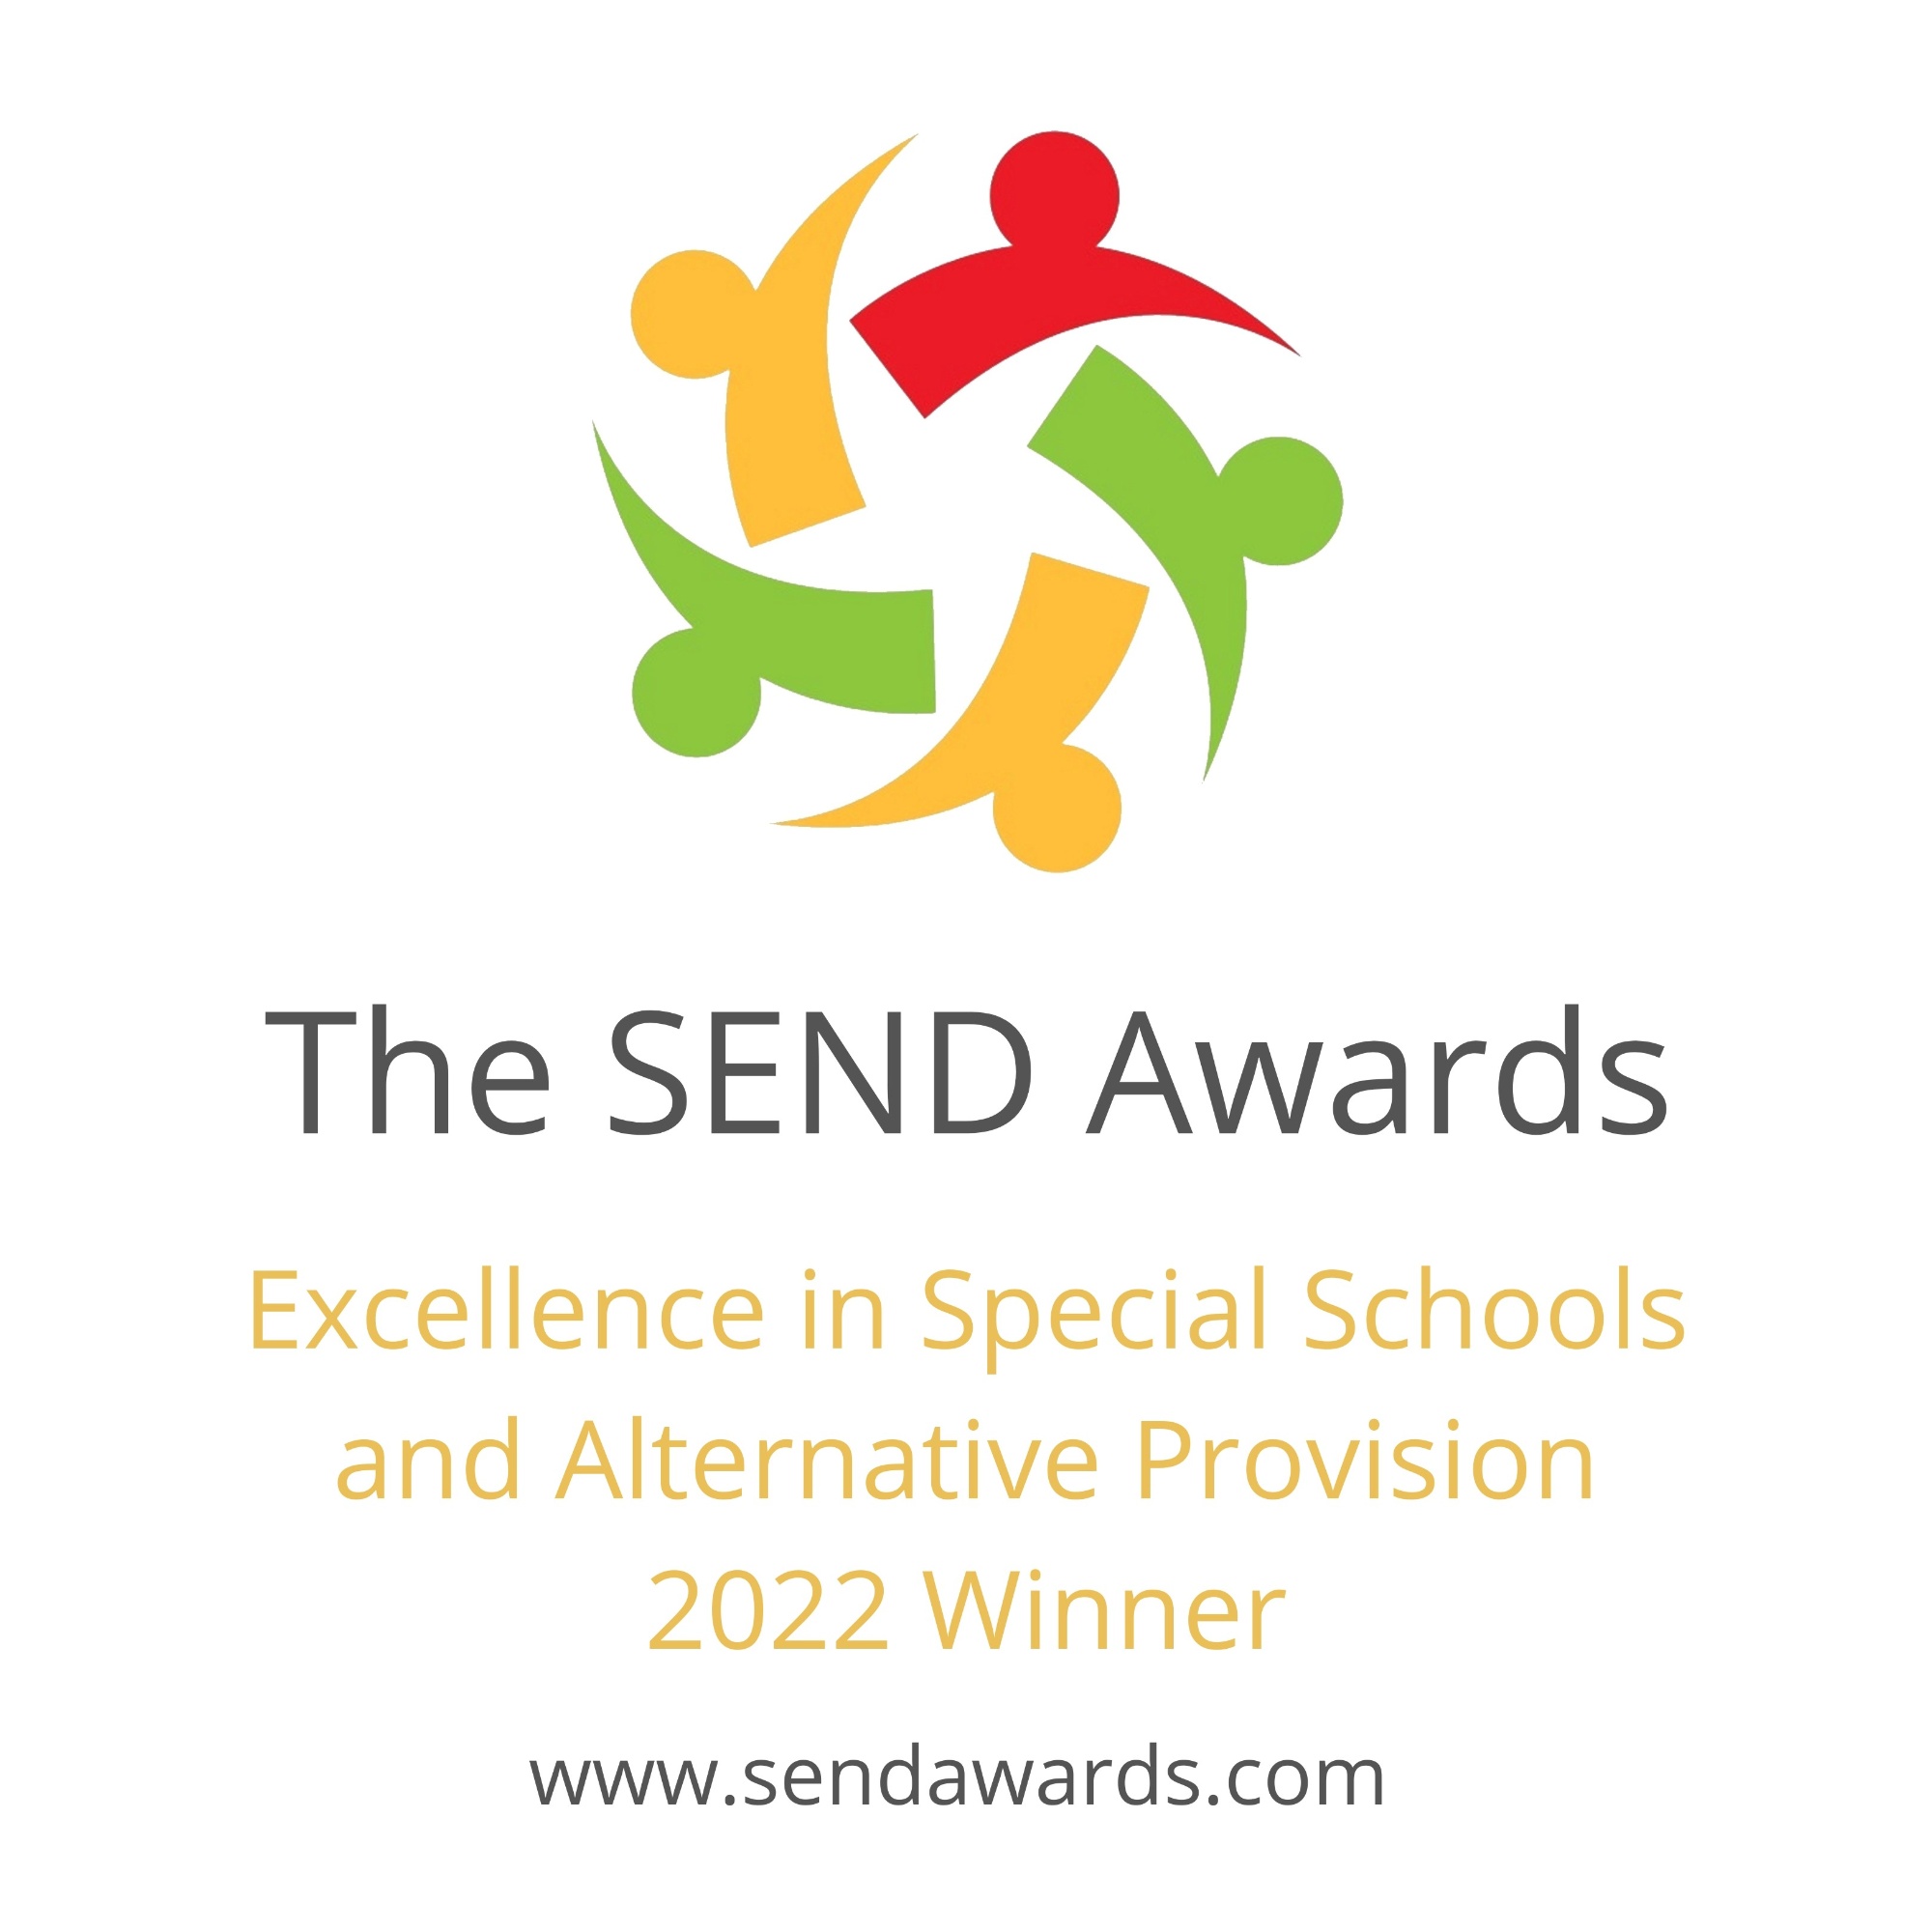 The SEND Awards